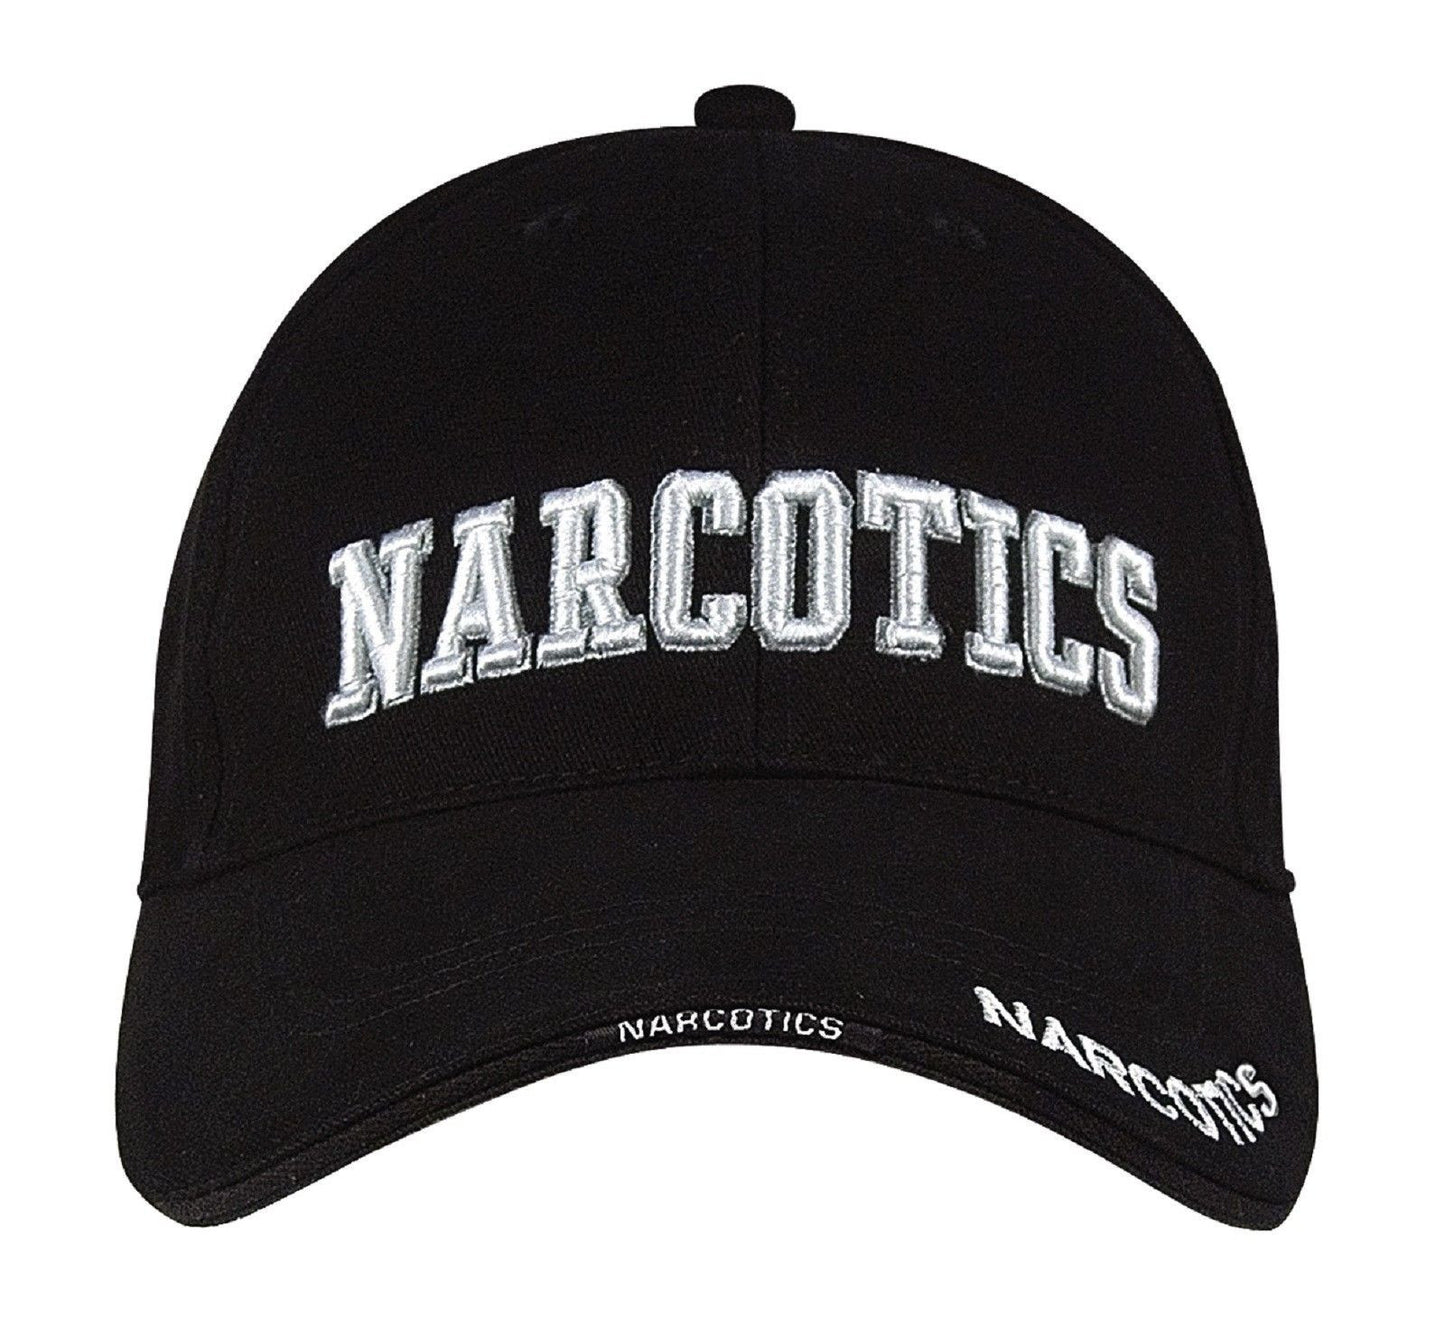 Black "Narcotics" Cap - Deluxe Low Profile Baseball Hat